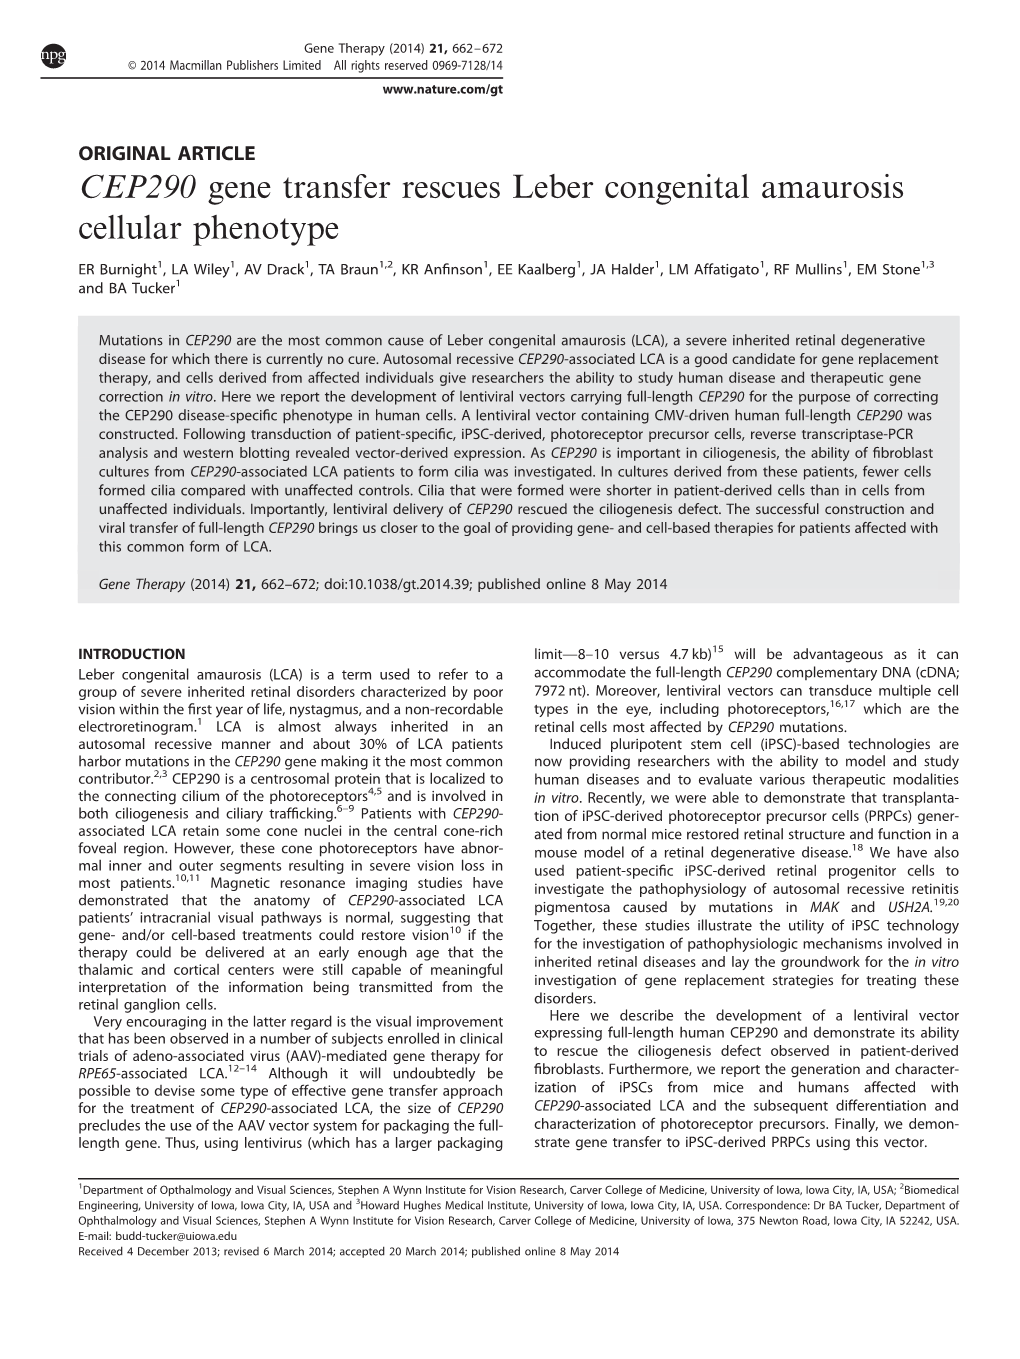 CEP290 Gene Transfer Rescues Leber Congenital Amaurosis Cellular Phenotype